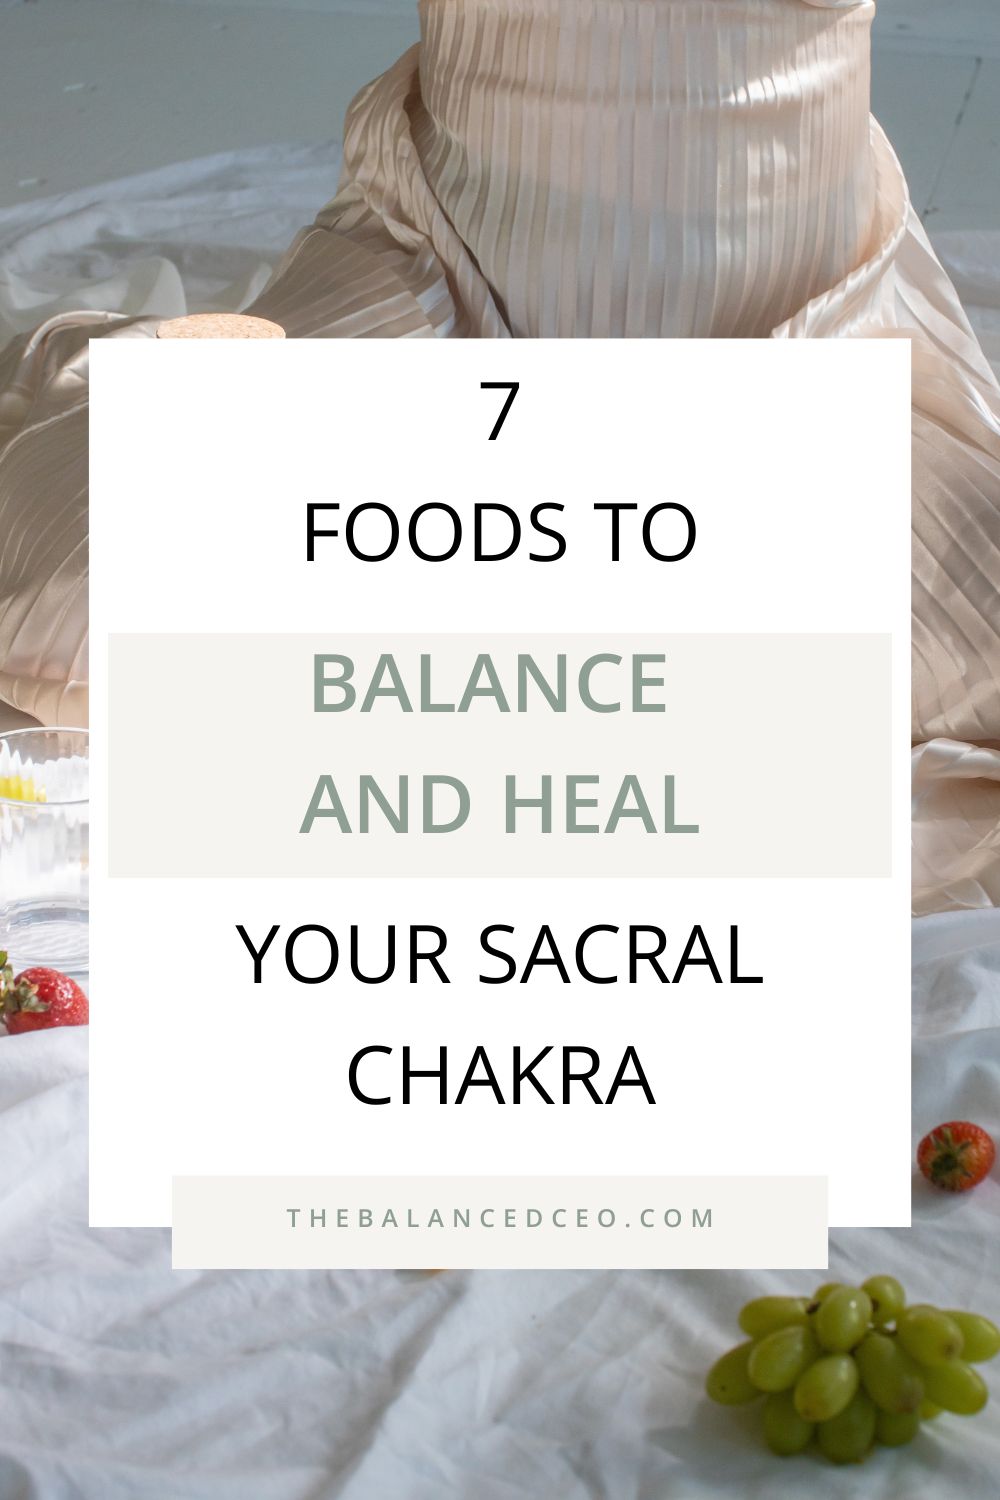 7 Foods to Balance and Heal Your Sacral Chakra